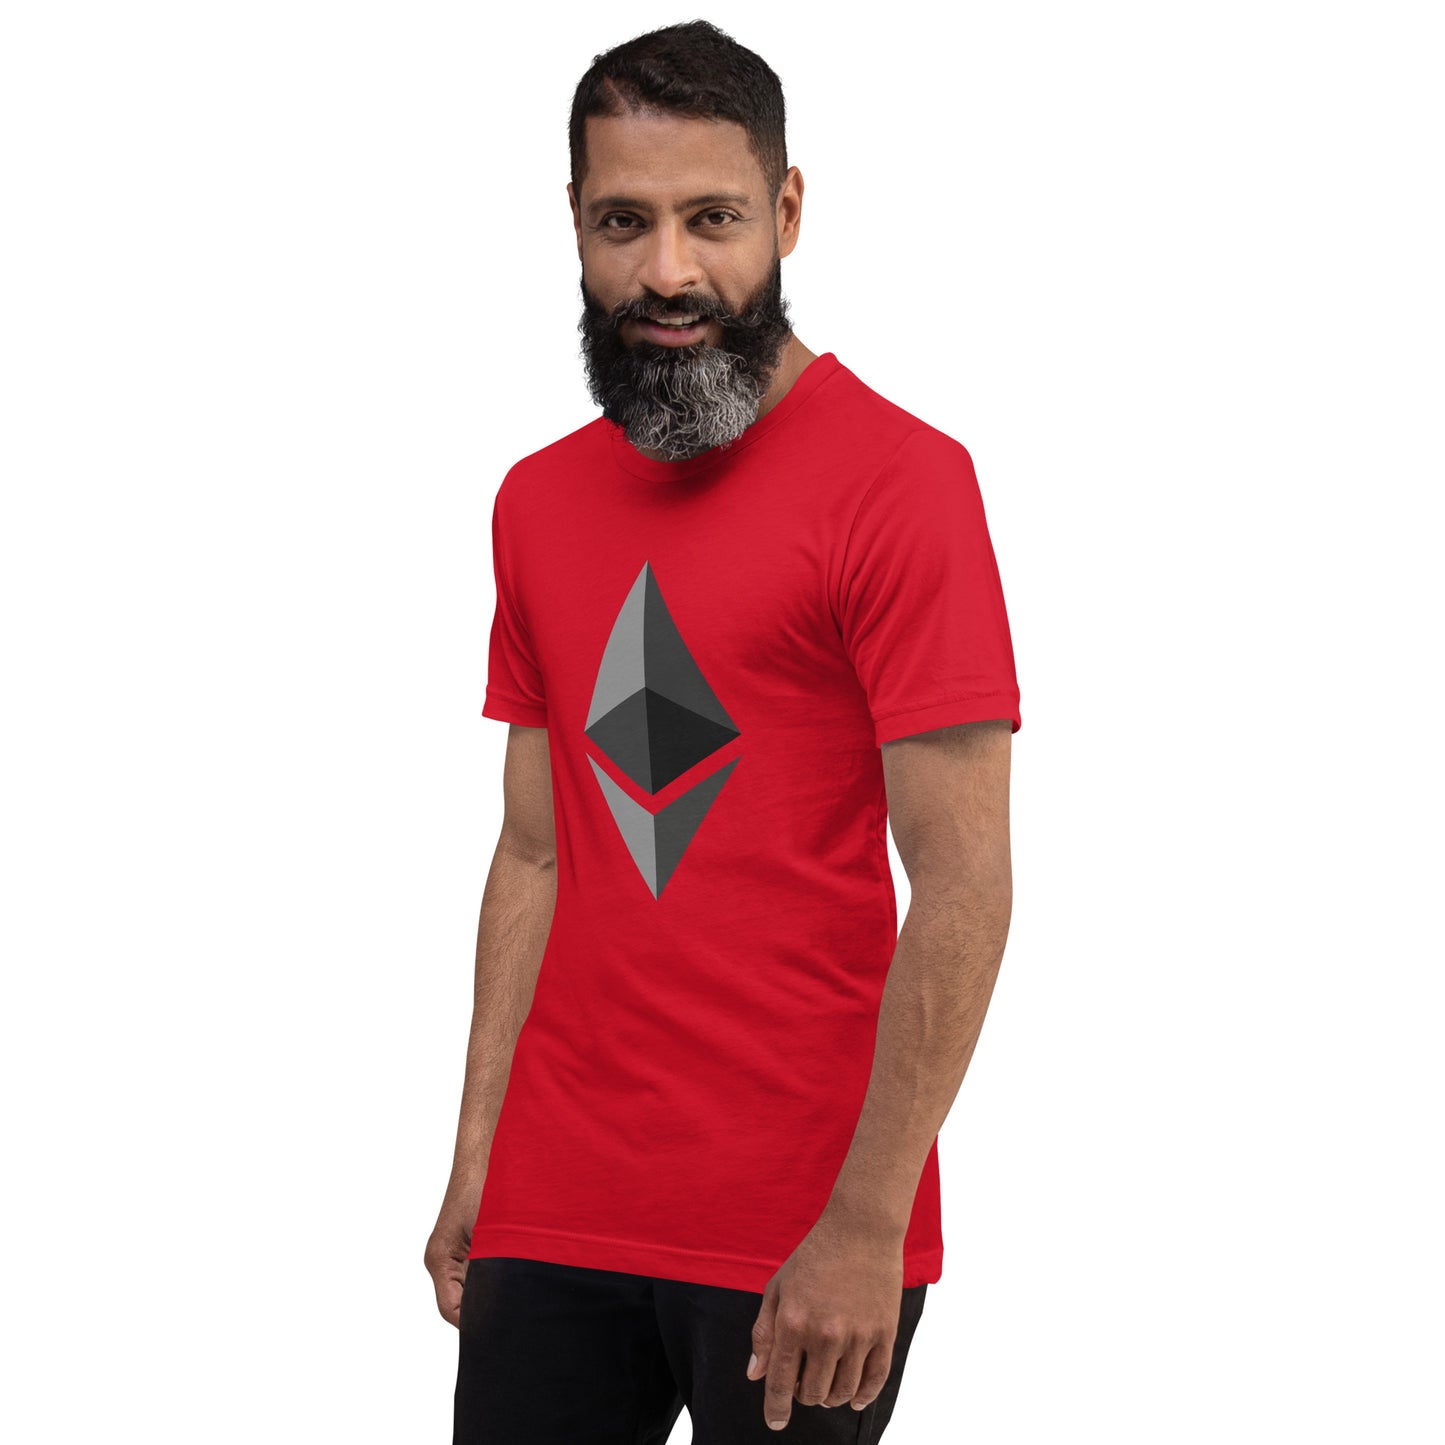 Ethereum T-Shirt